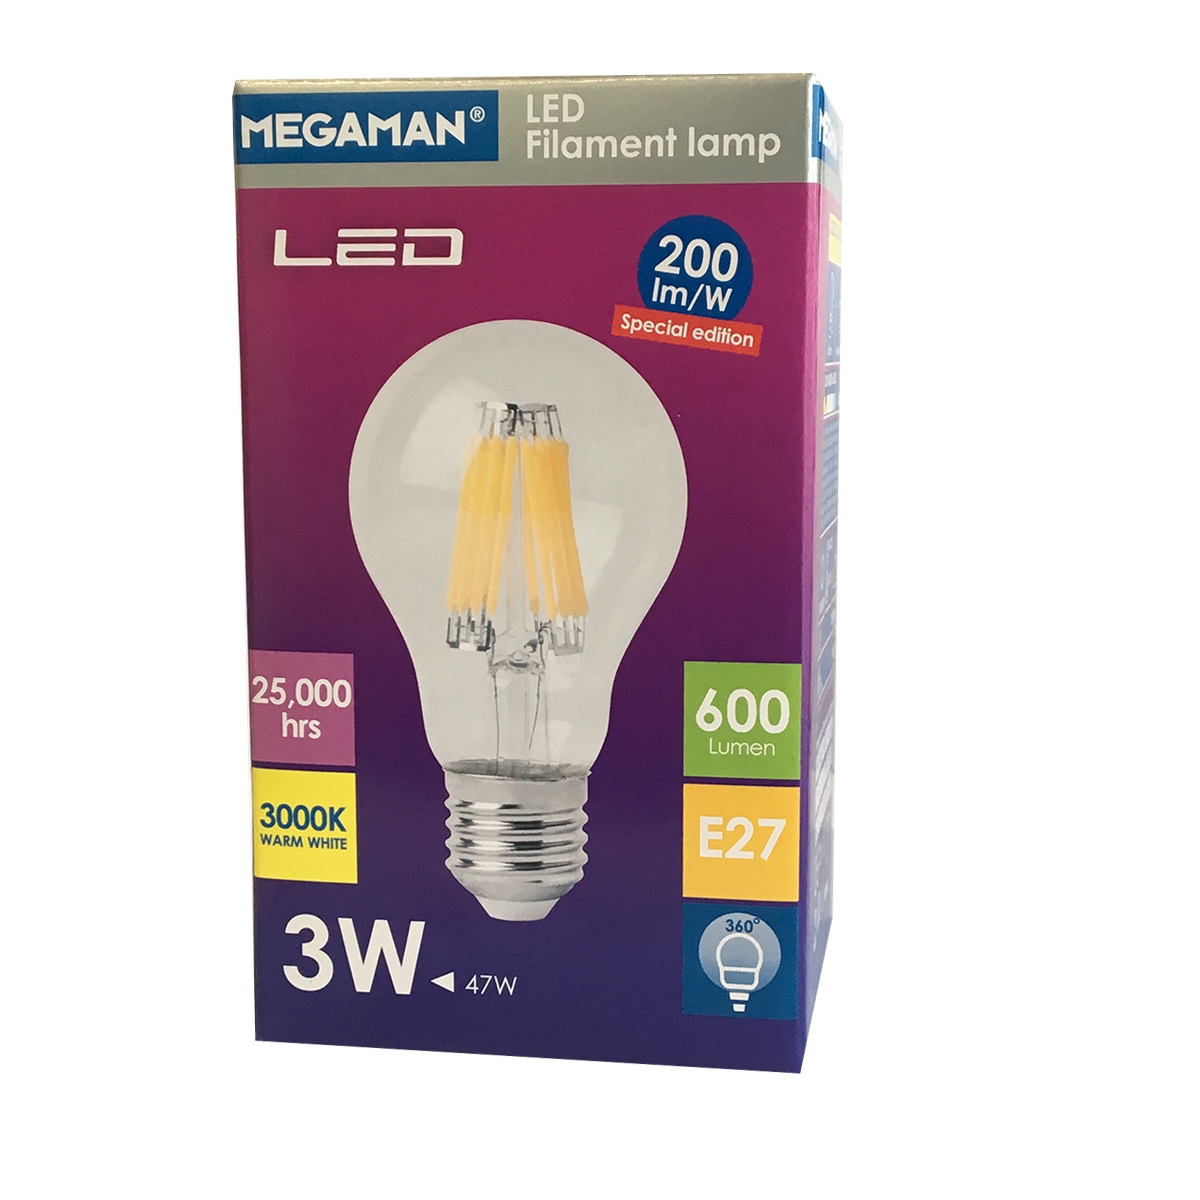 Megaman E27 Special Edition LED Classic Filament Bulb LG202030-CSv00  3W 3000K - Warm White 